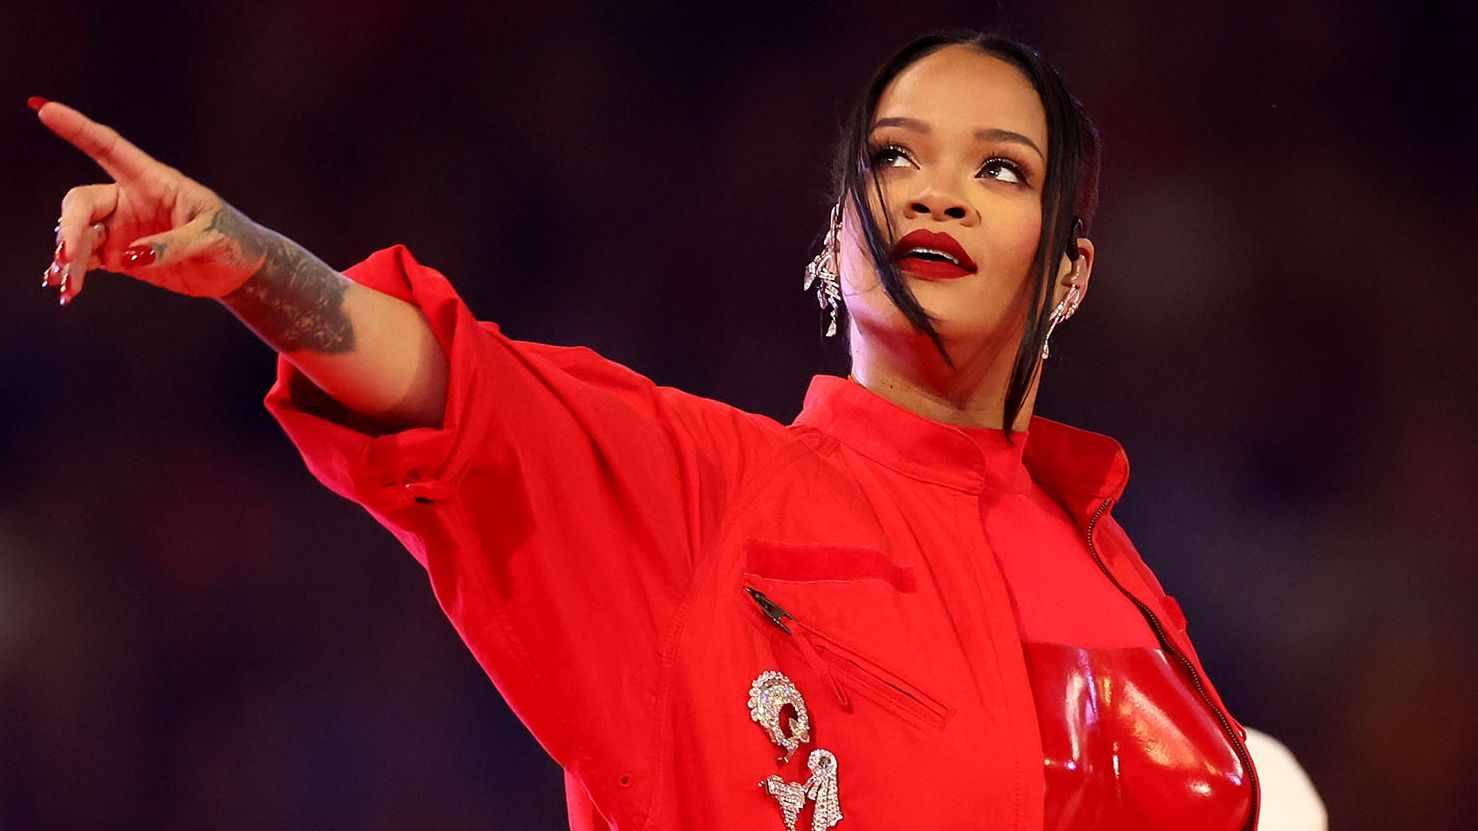 Rihanna R9 album release: Singer teases fans over unreleased music